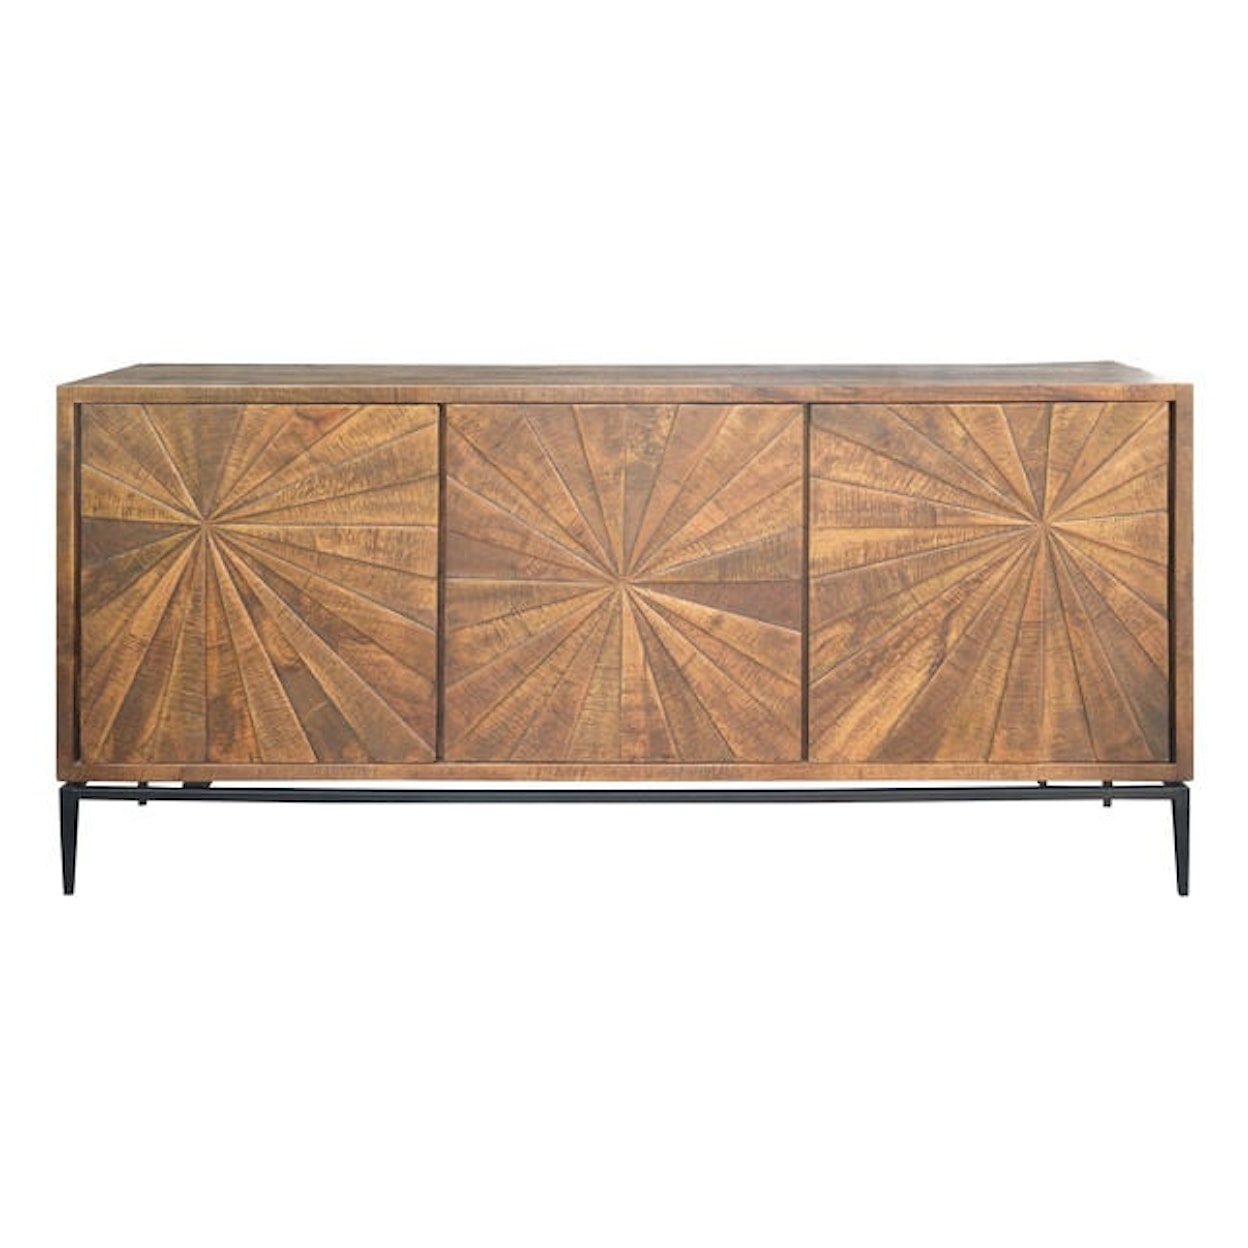 Dovetail Furniture Casegoods Carlos Sideboard